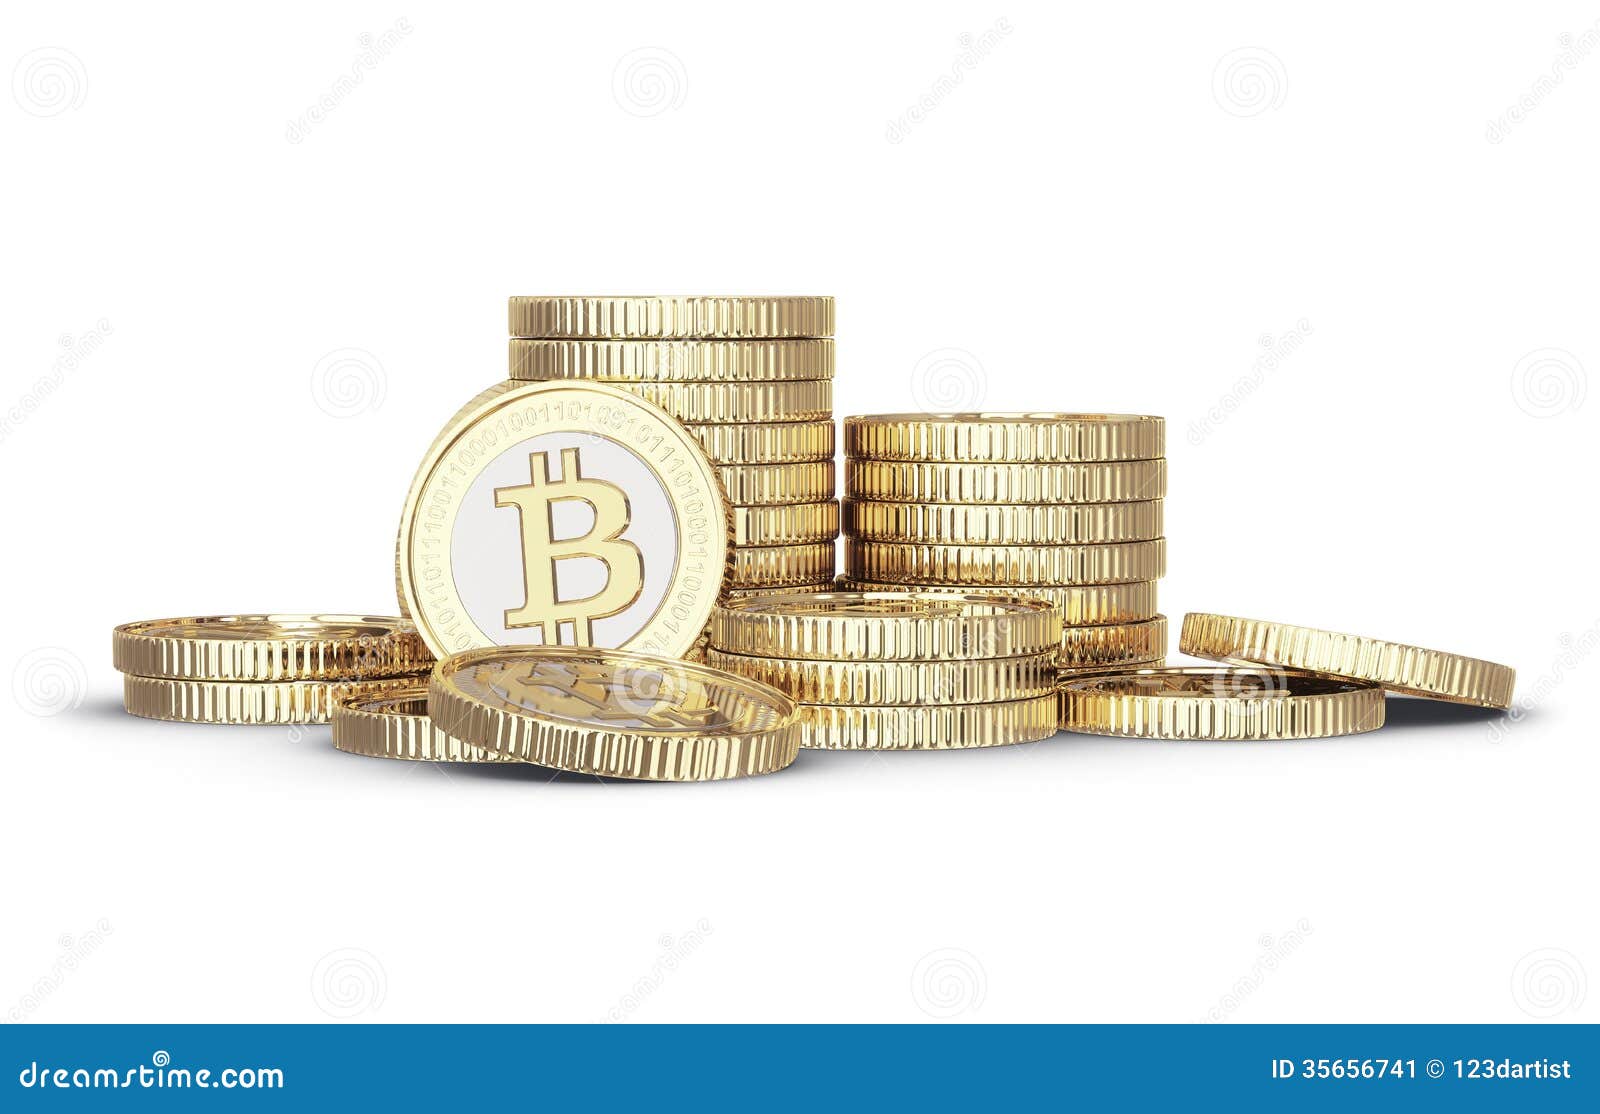 golden bitcoin